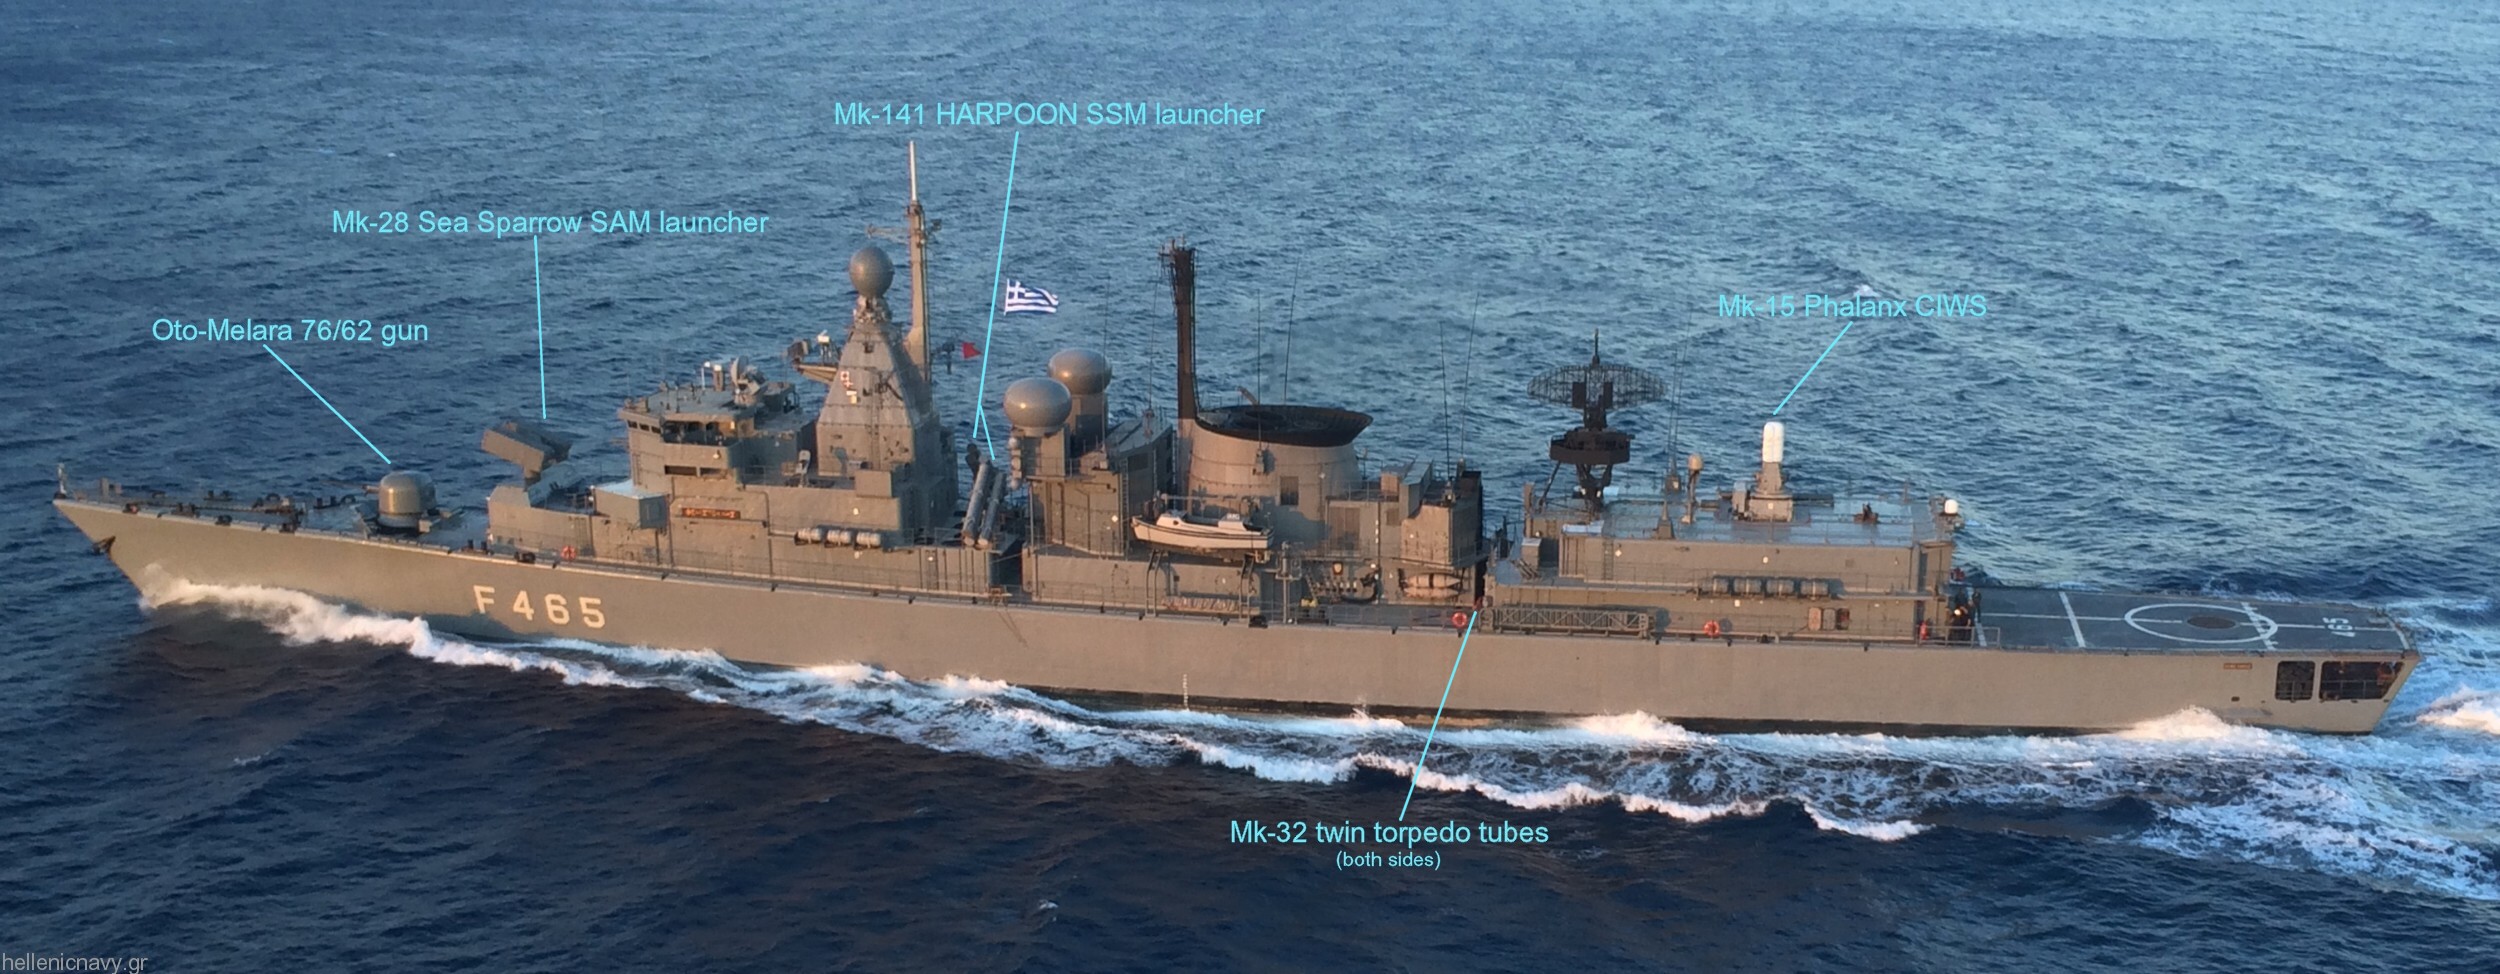 elli kortenaer standard class frigate hellenic navy armament sea sparrow harpoon missile oto melara 76/62 gun torpedo tubes 03